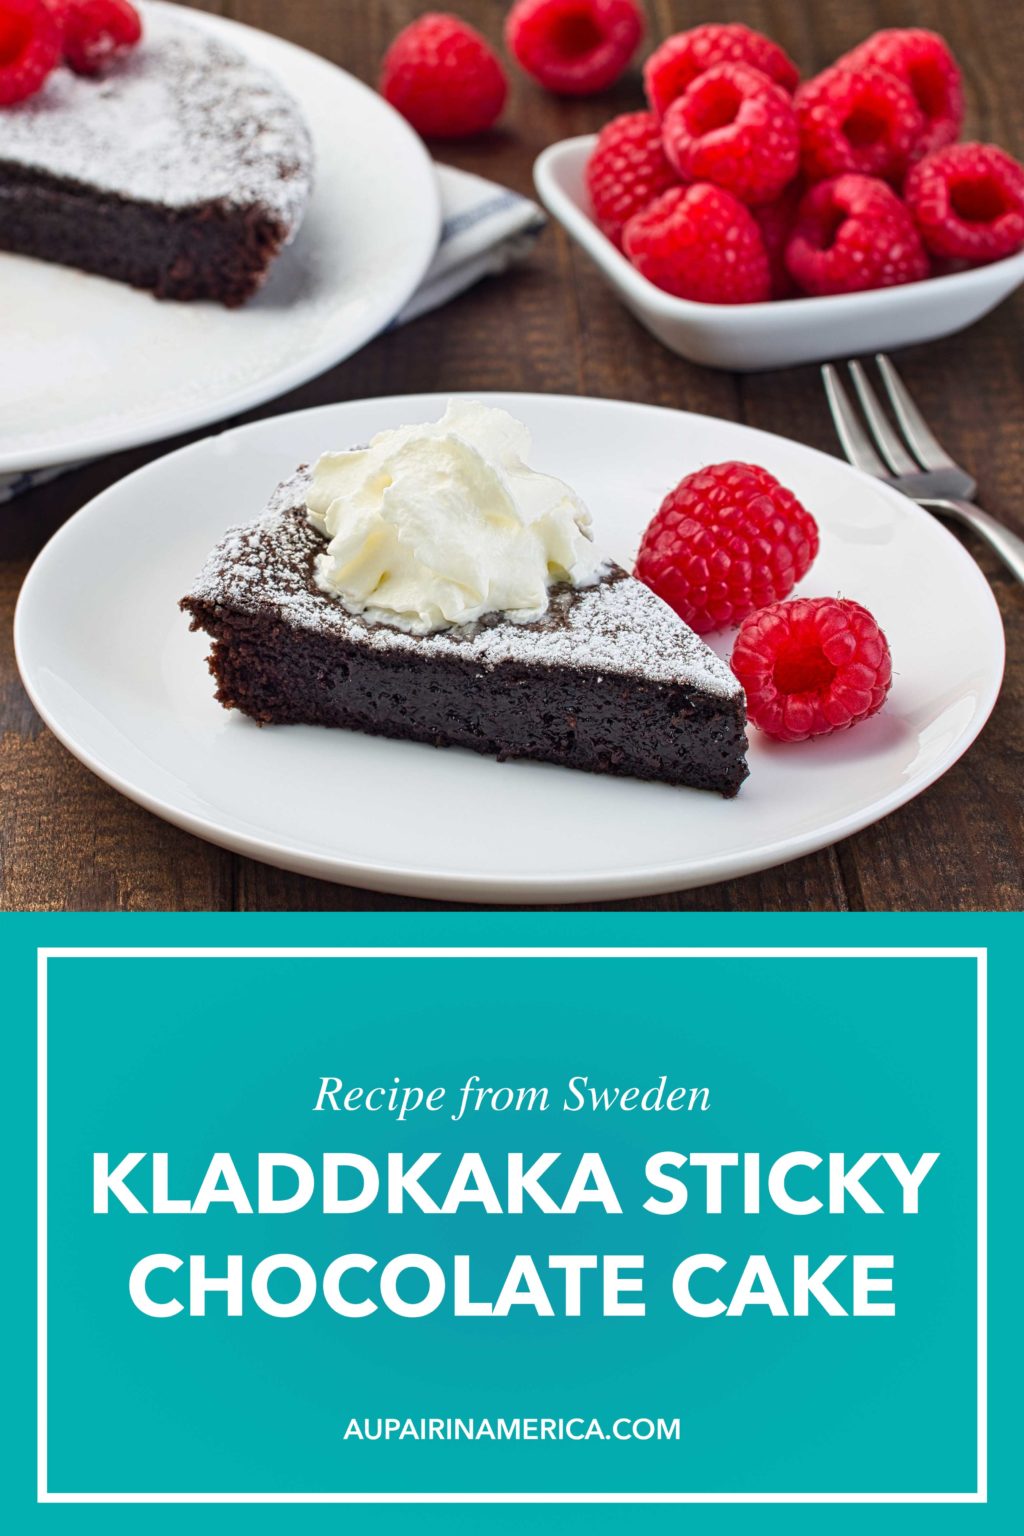 How to Make Swedish Kladdkaka, a Sticky Chocolate Cake